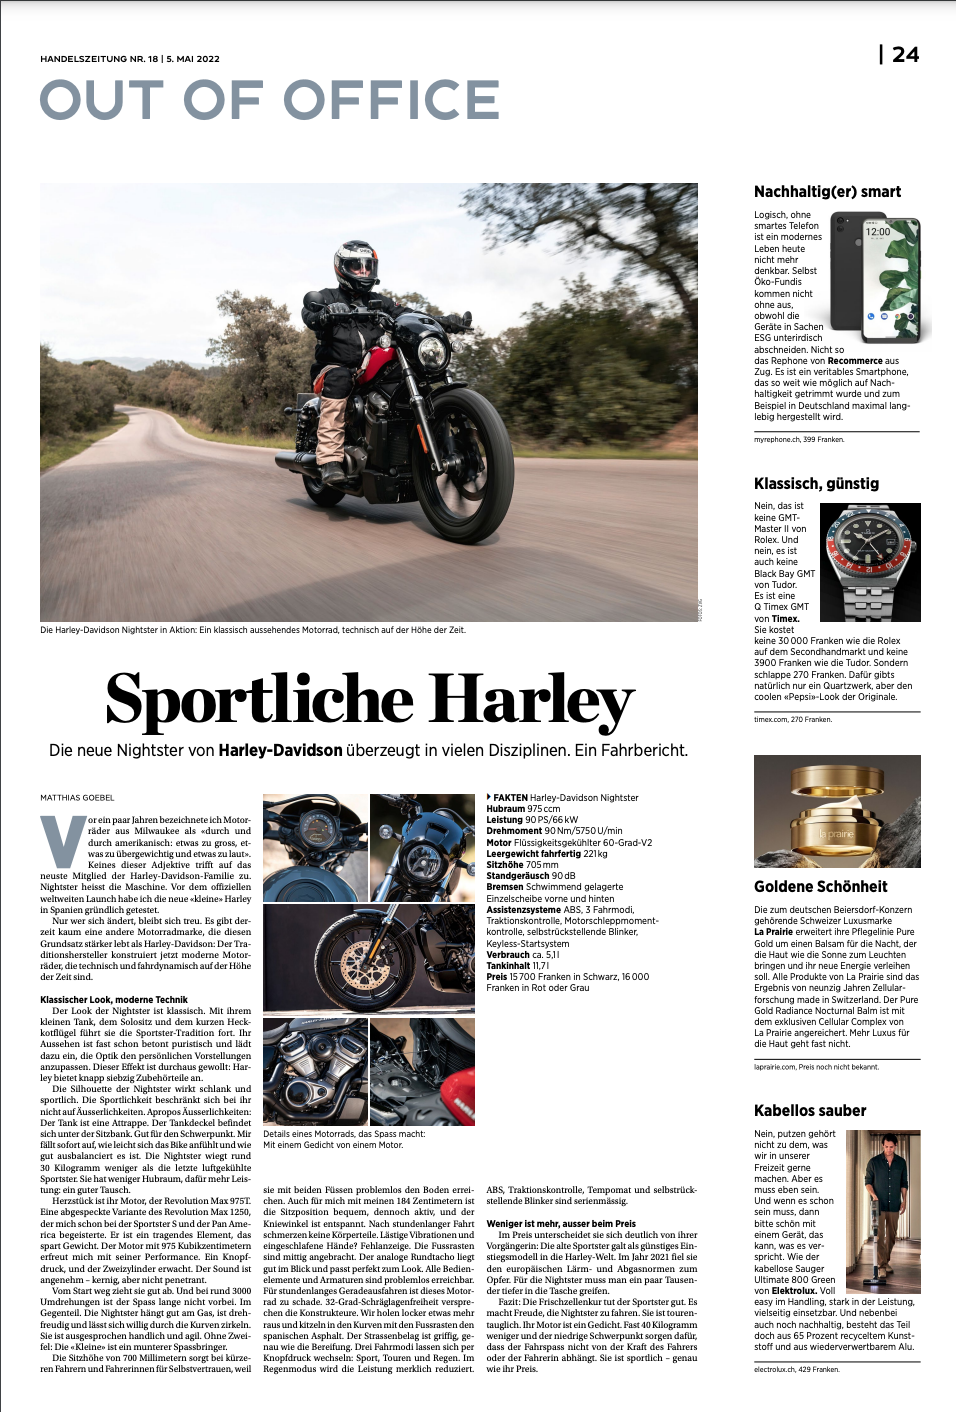 Nightster, die sportliche Harley